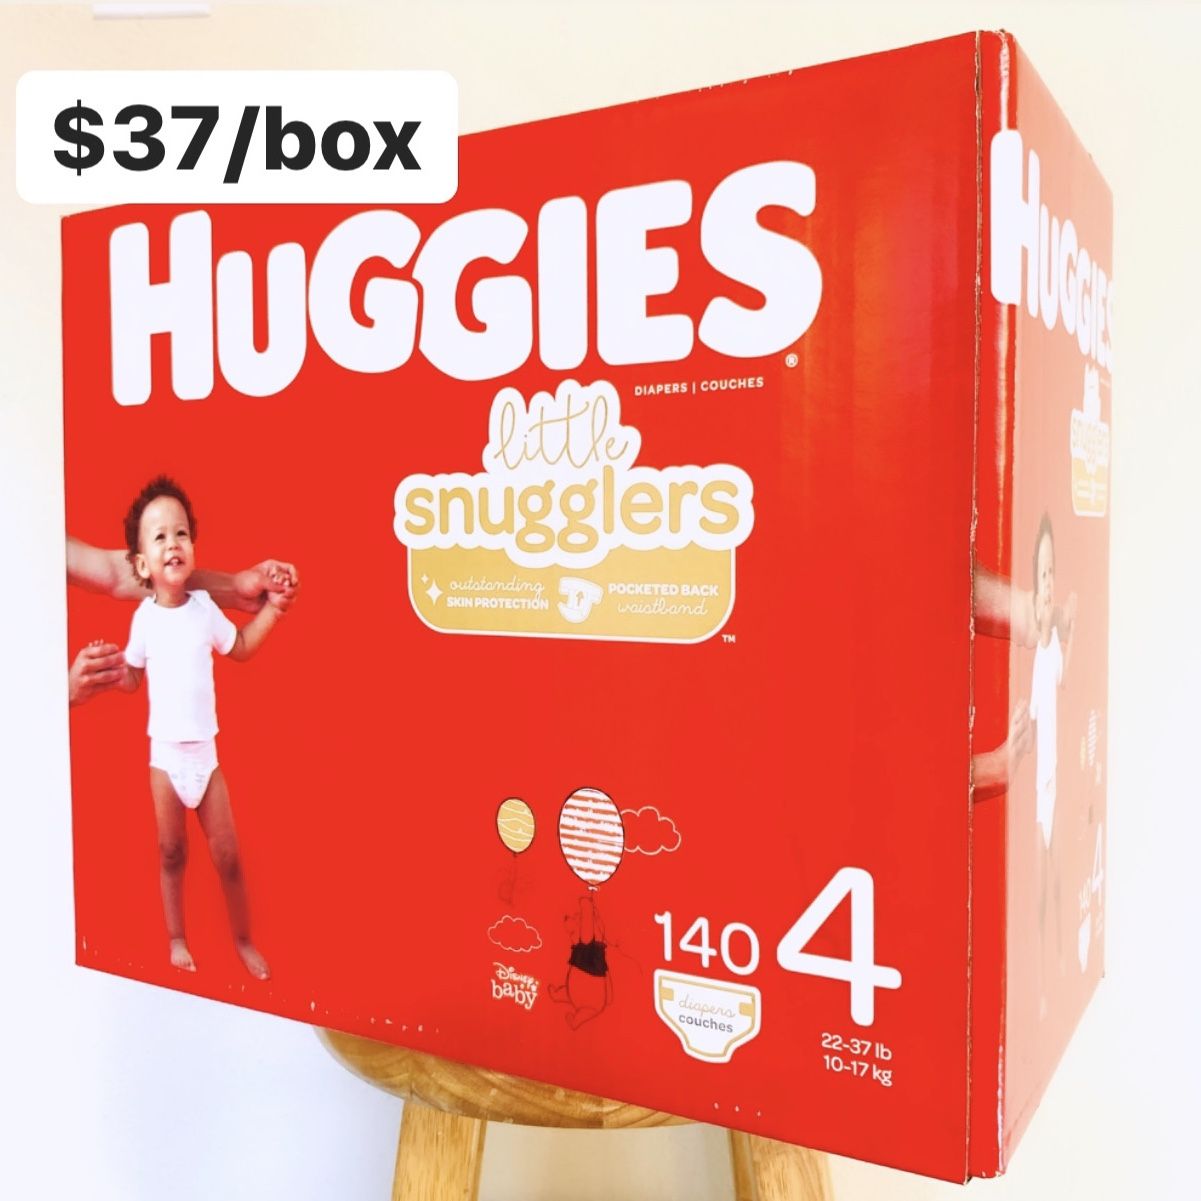 Size 4 (22-37 lbs) Huggies LS (140 baby diapers)